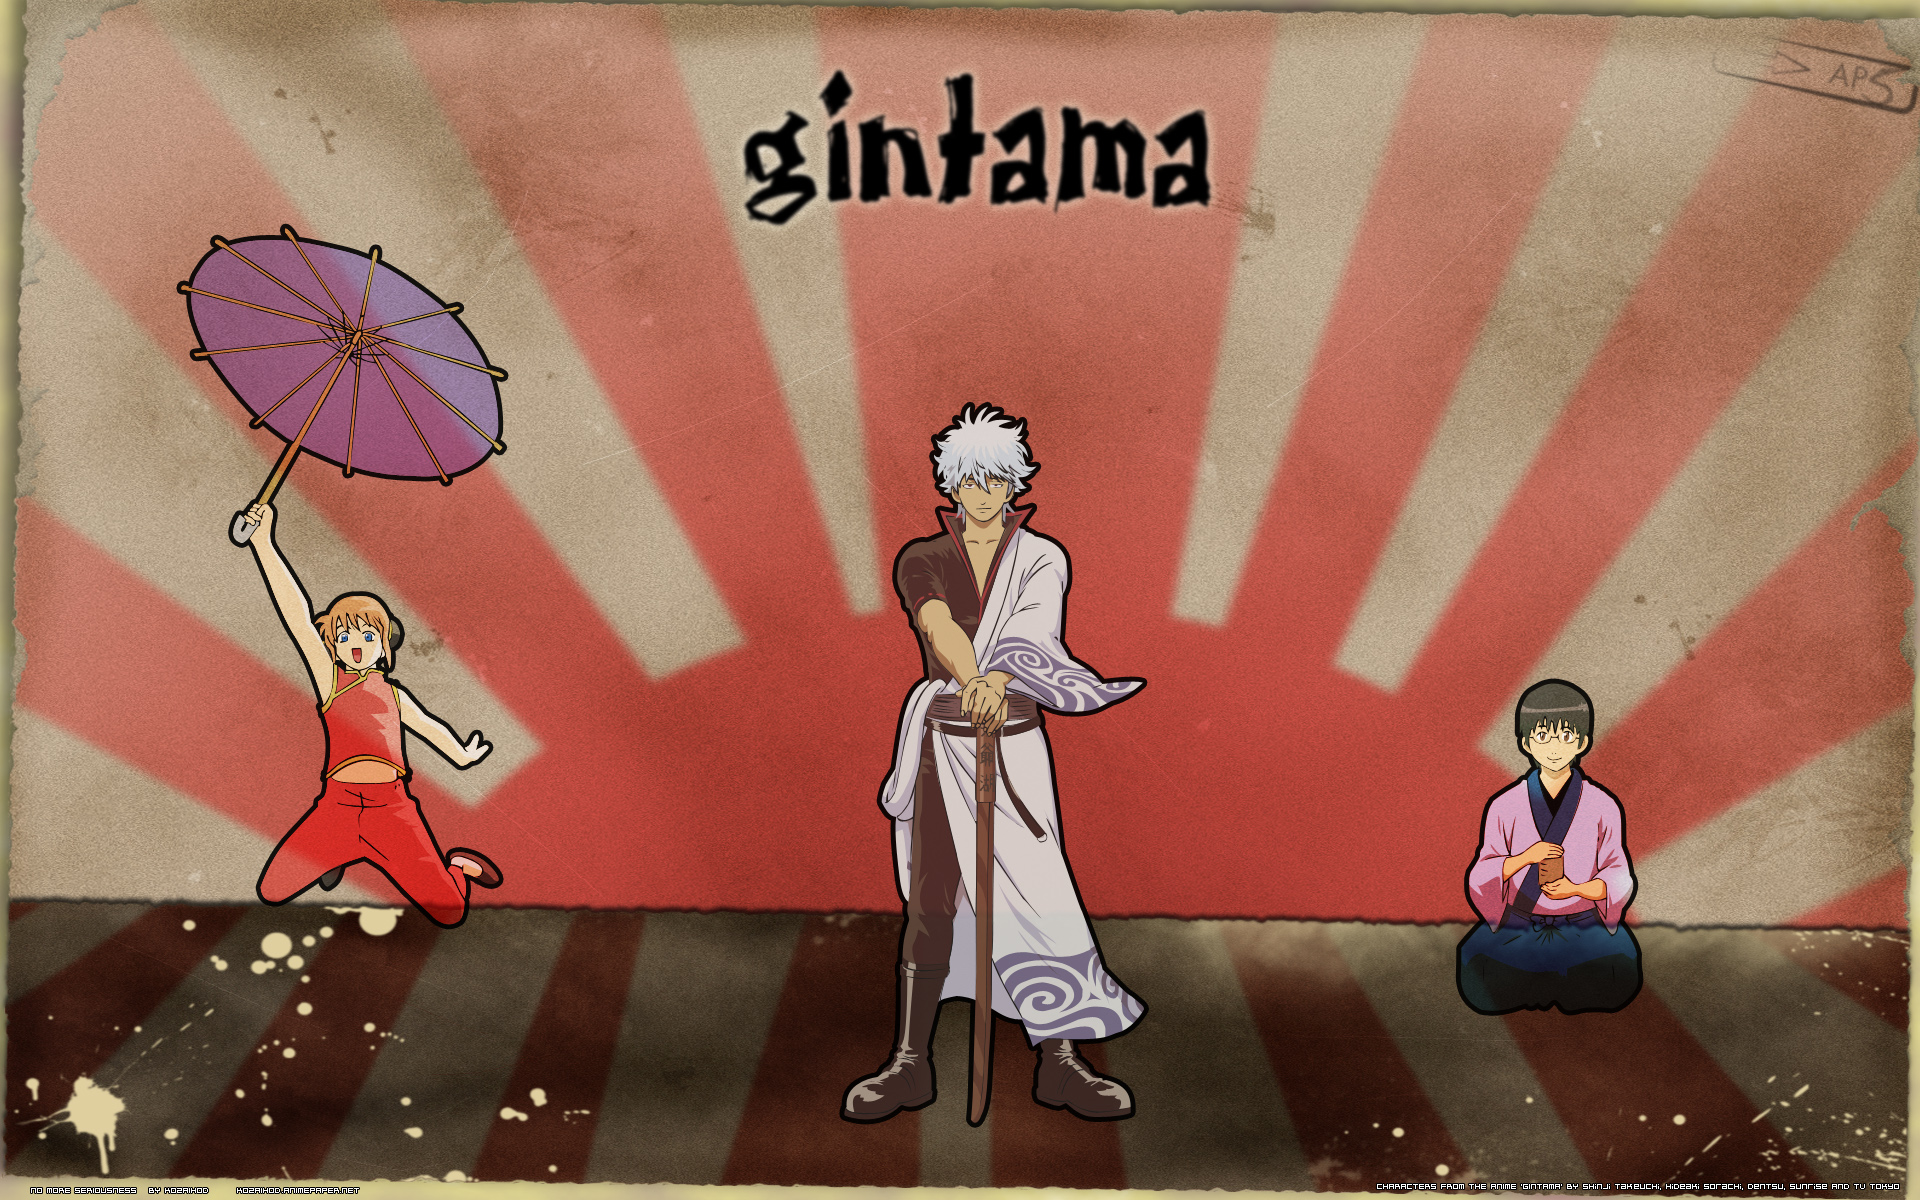 Gintama - обои на рабочий стол